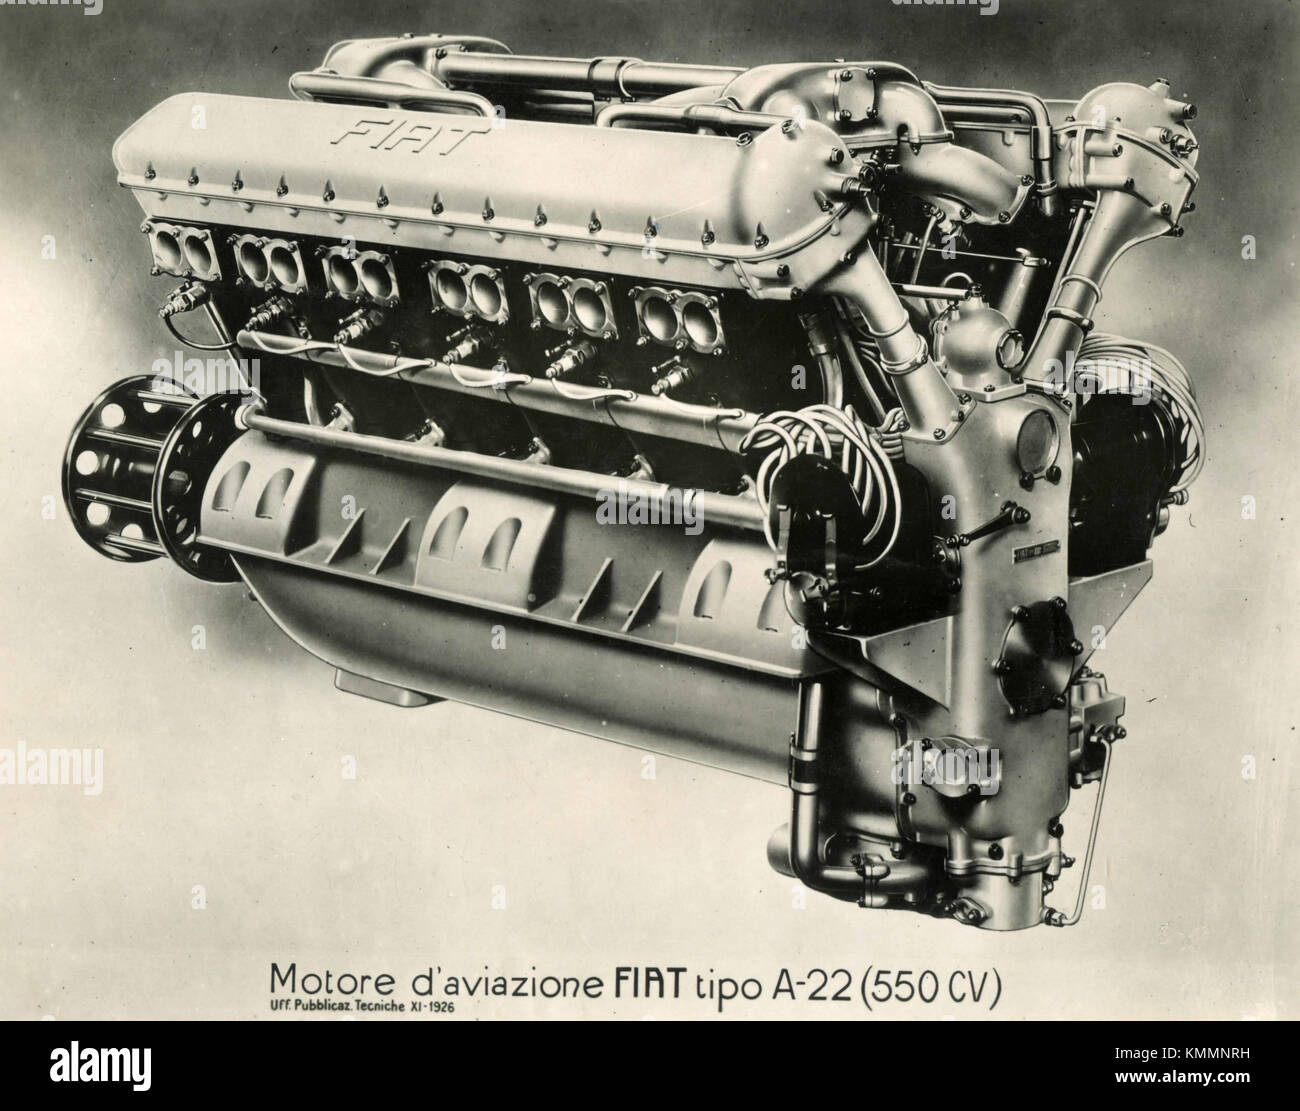 FIAT motore aviazione A.22 (550 CV), Italia 1920s Foto Stock